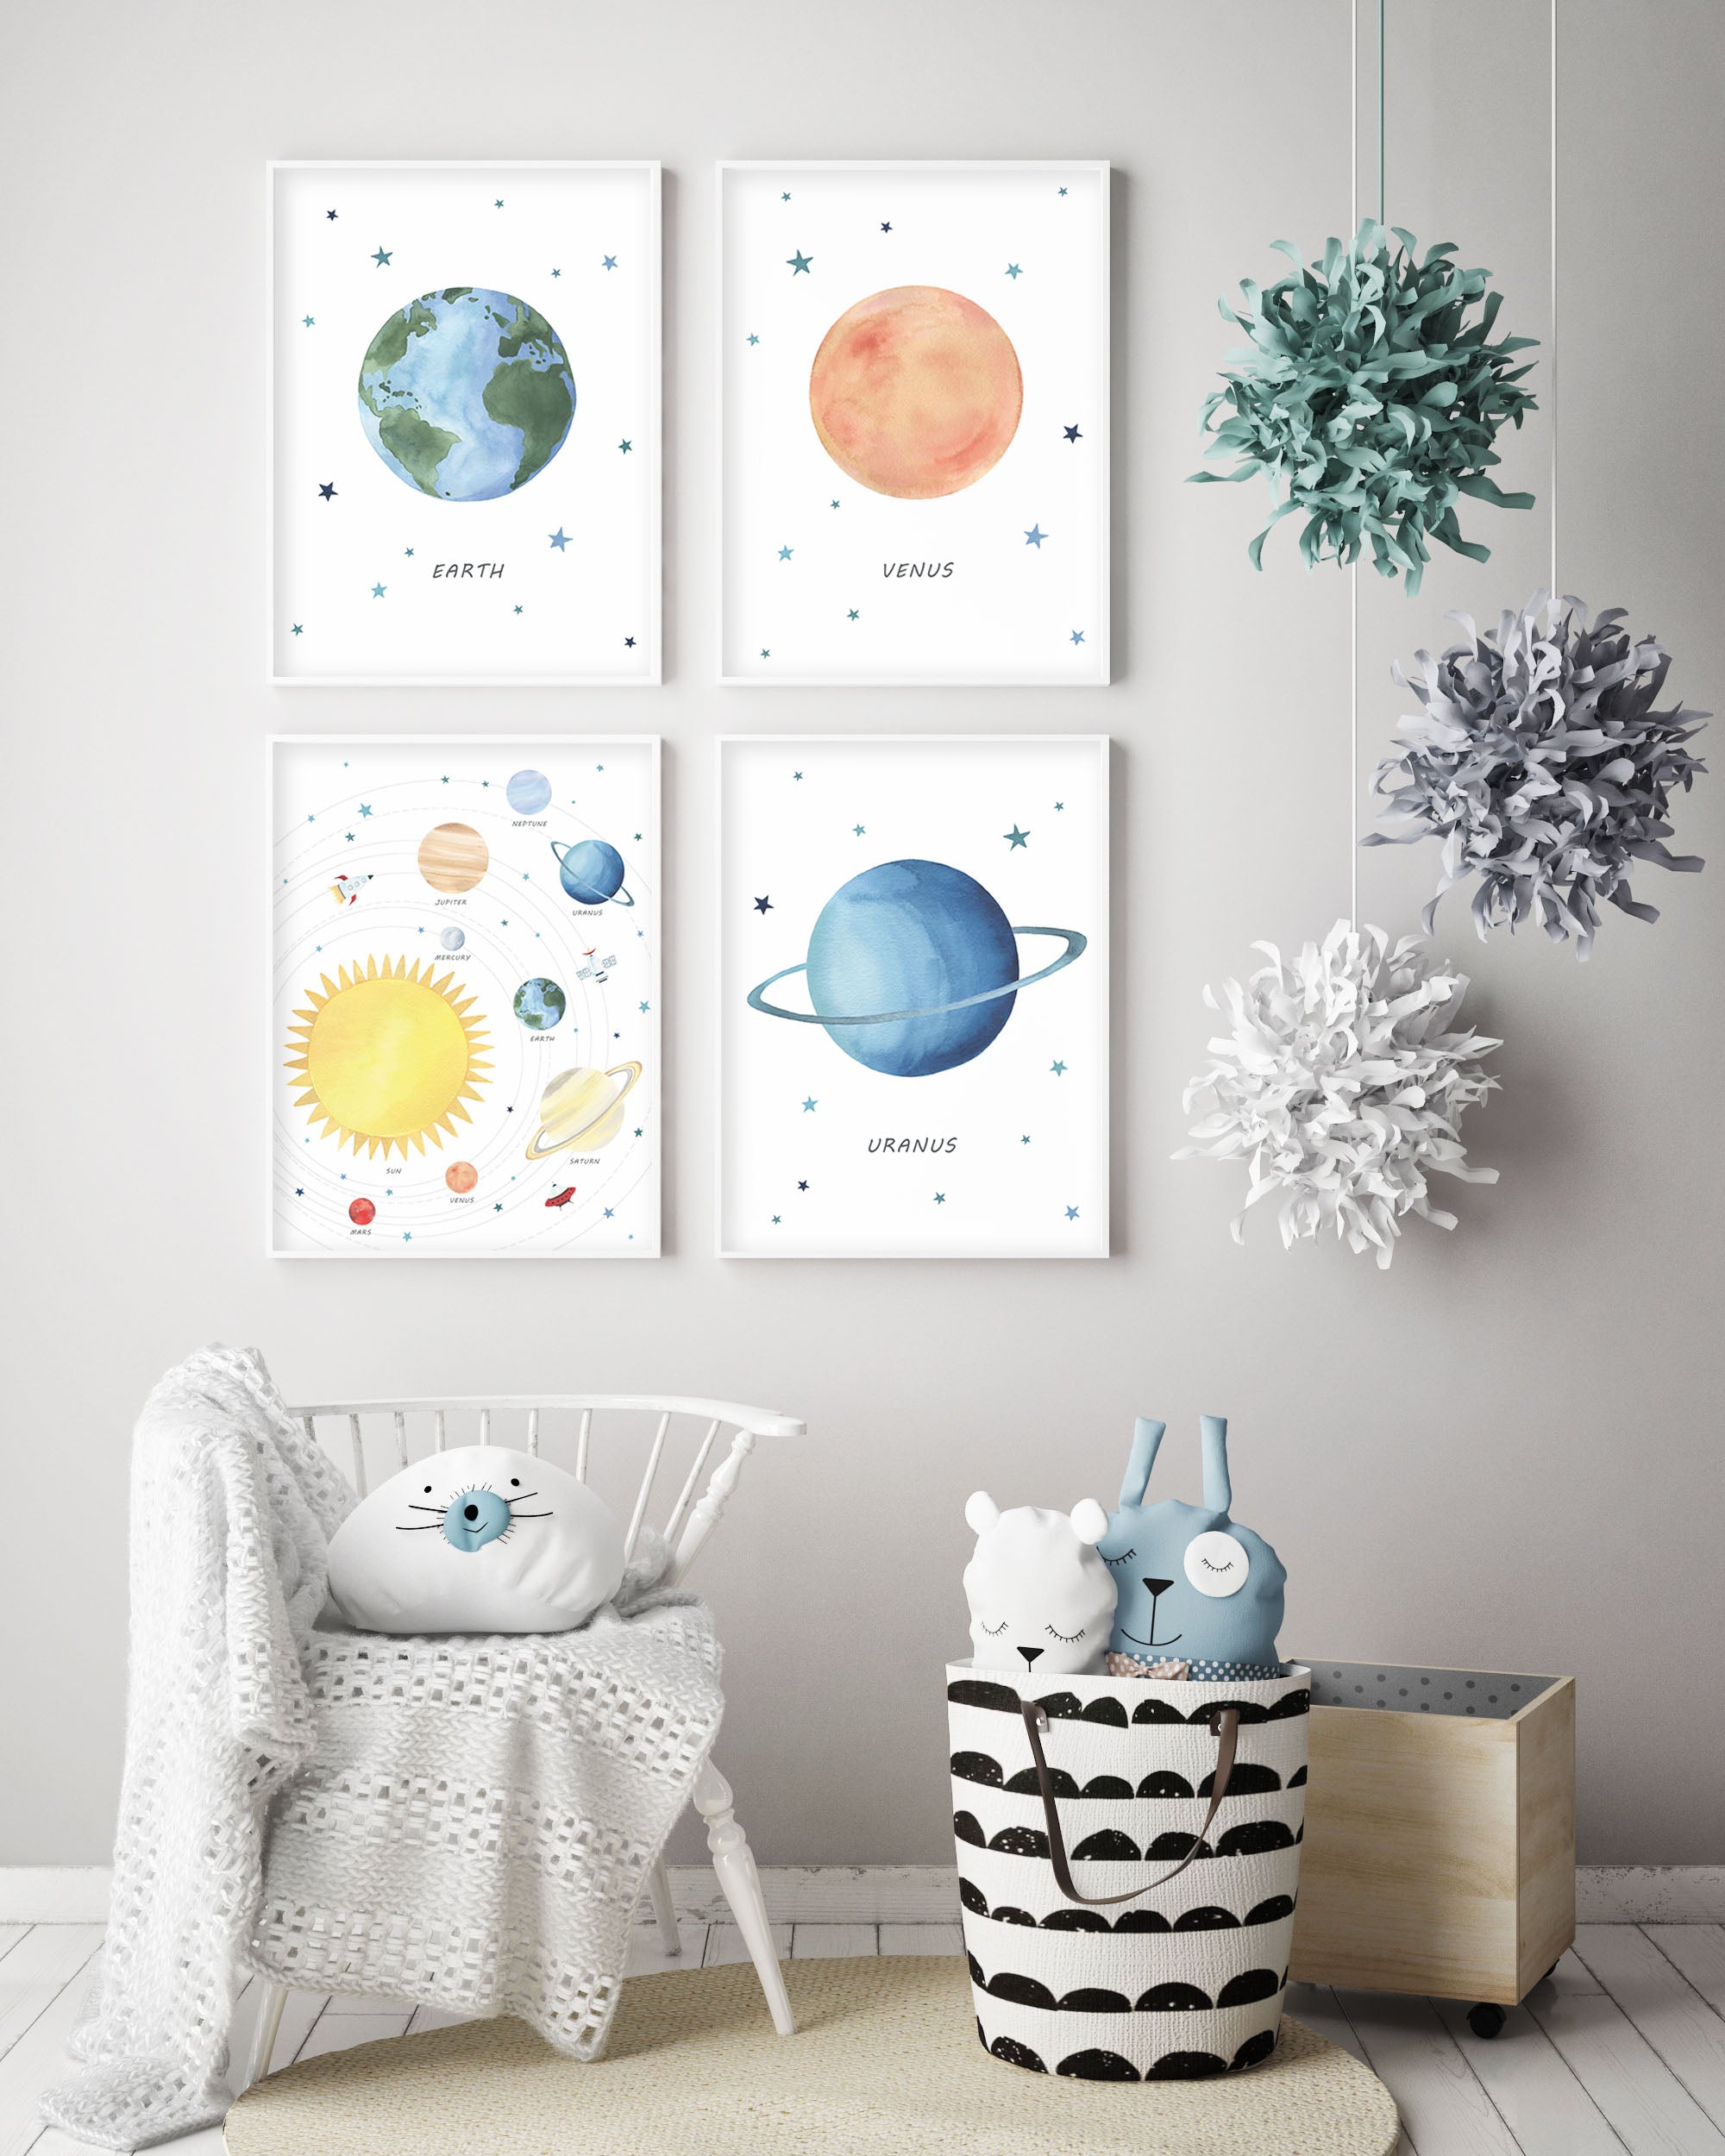 Planet Uranus Print - Outer Space Nursery - The Small Art Project - Modern Nursery Prints